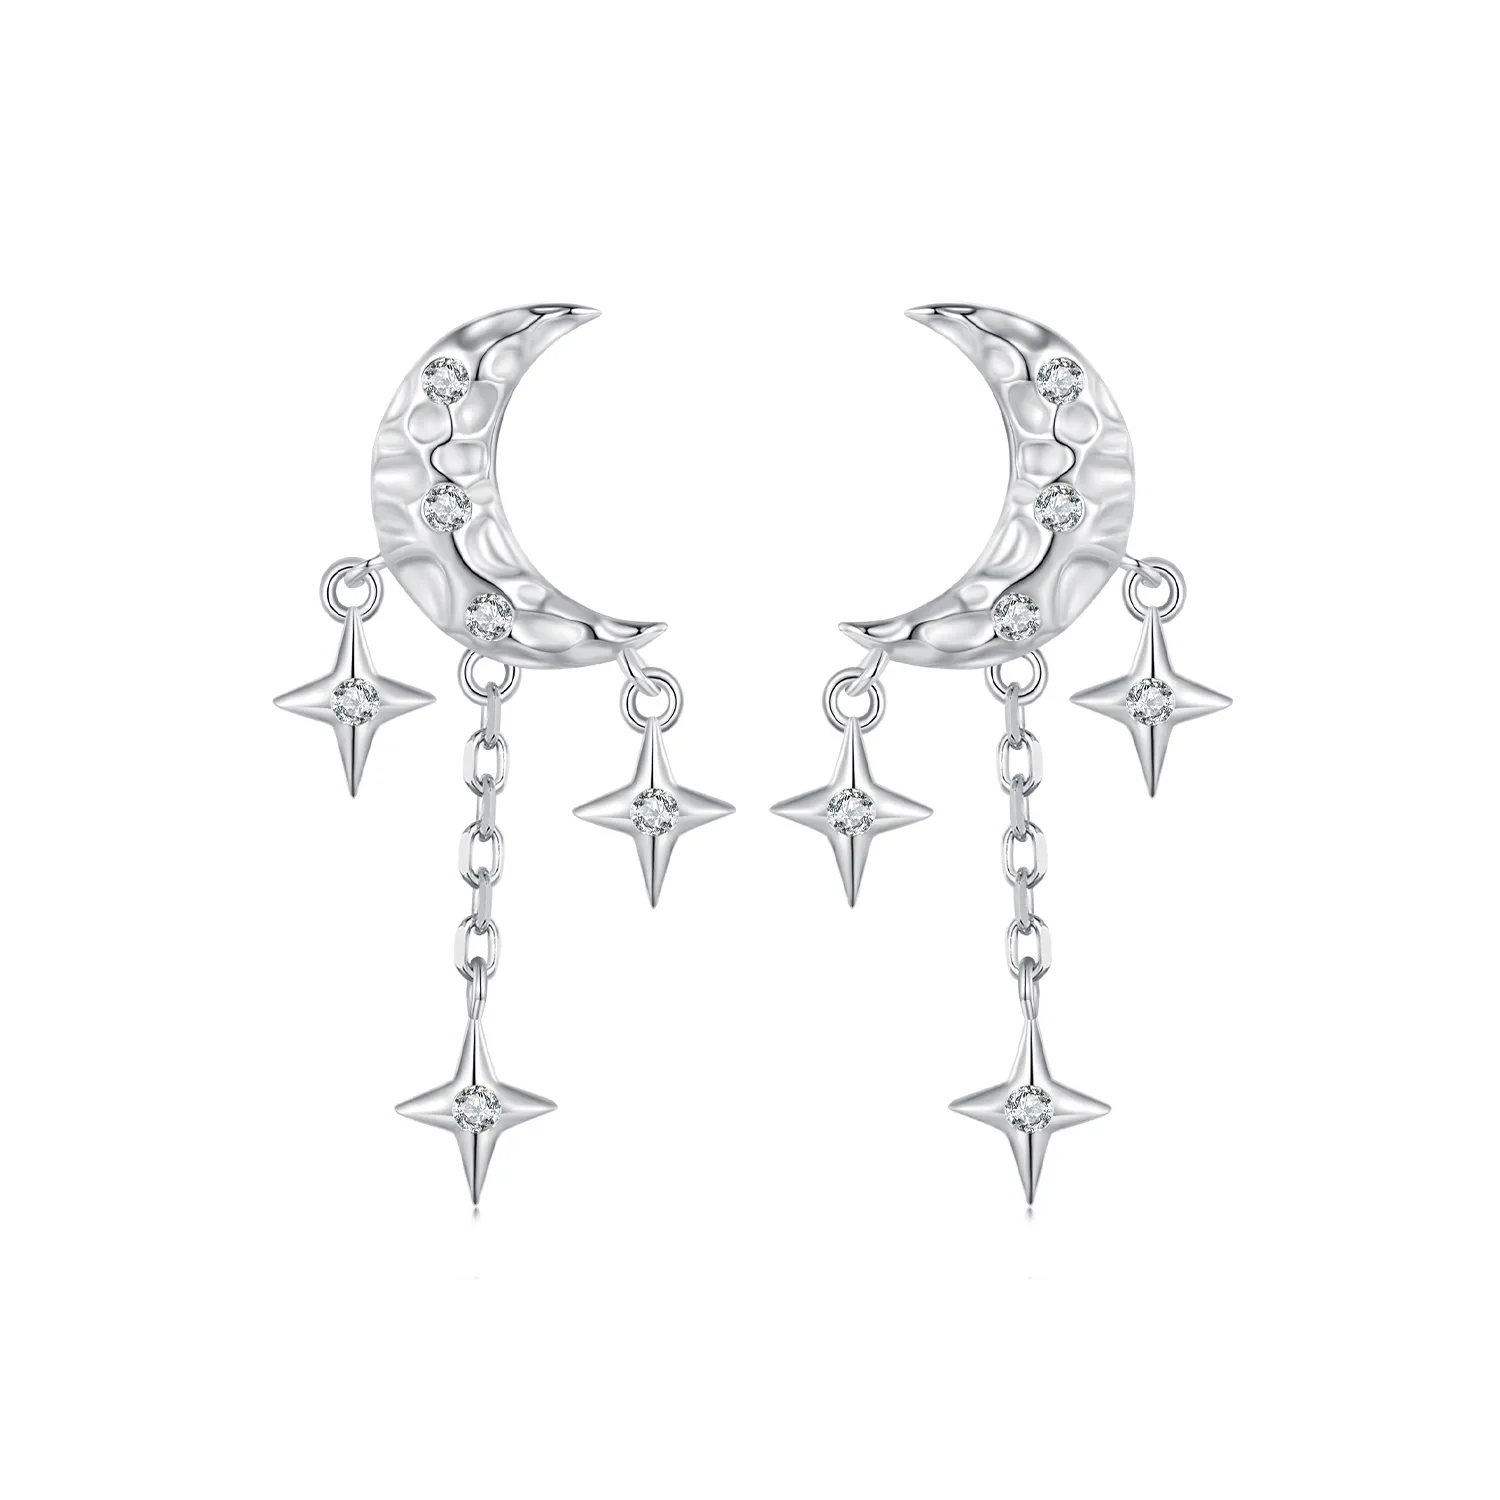 Pandora Style Moon Tassel Studs Earrings - BSE858